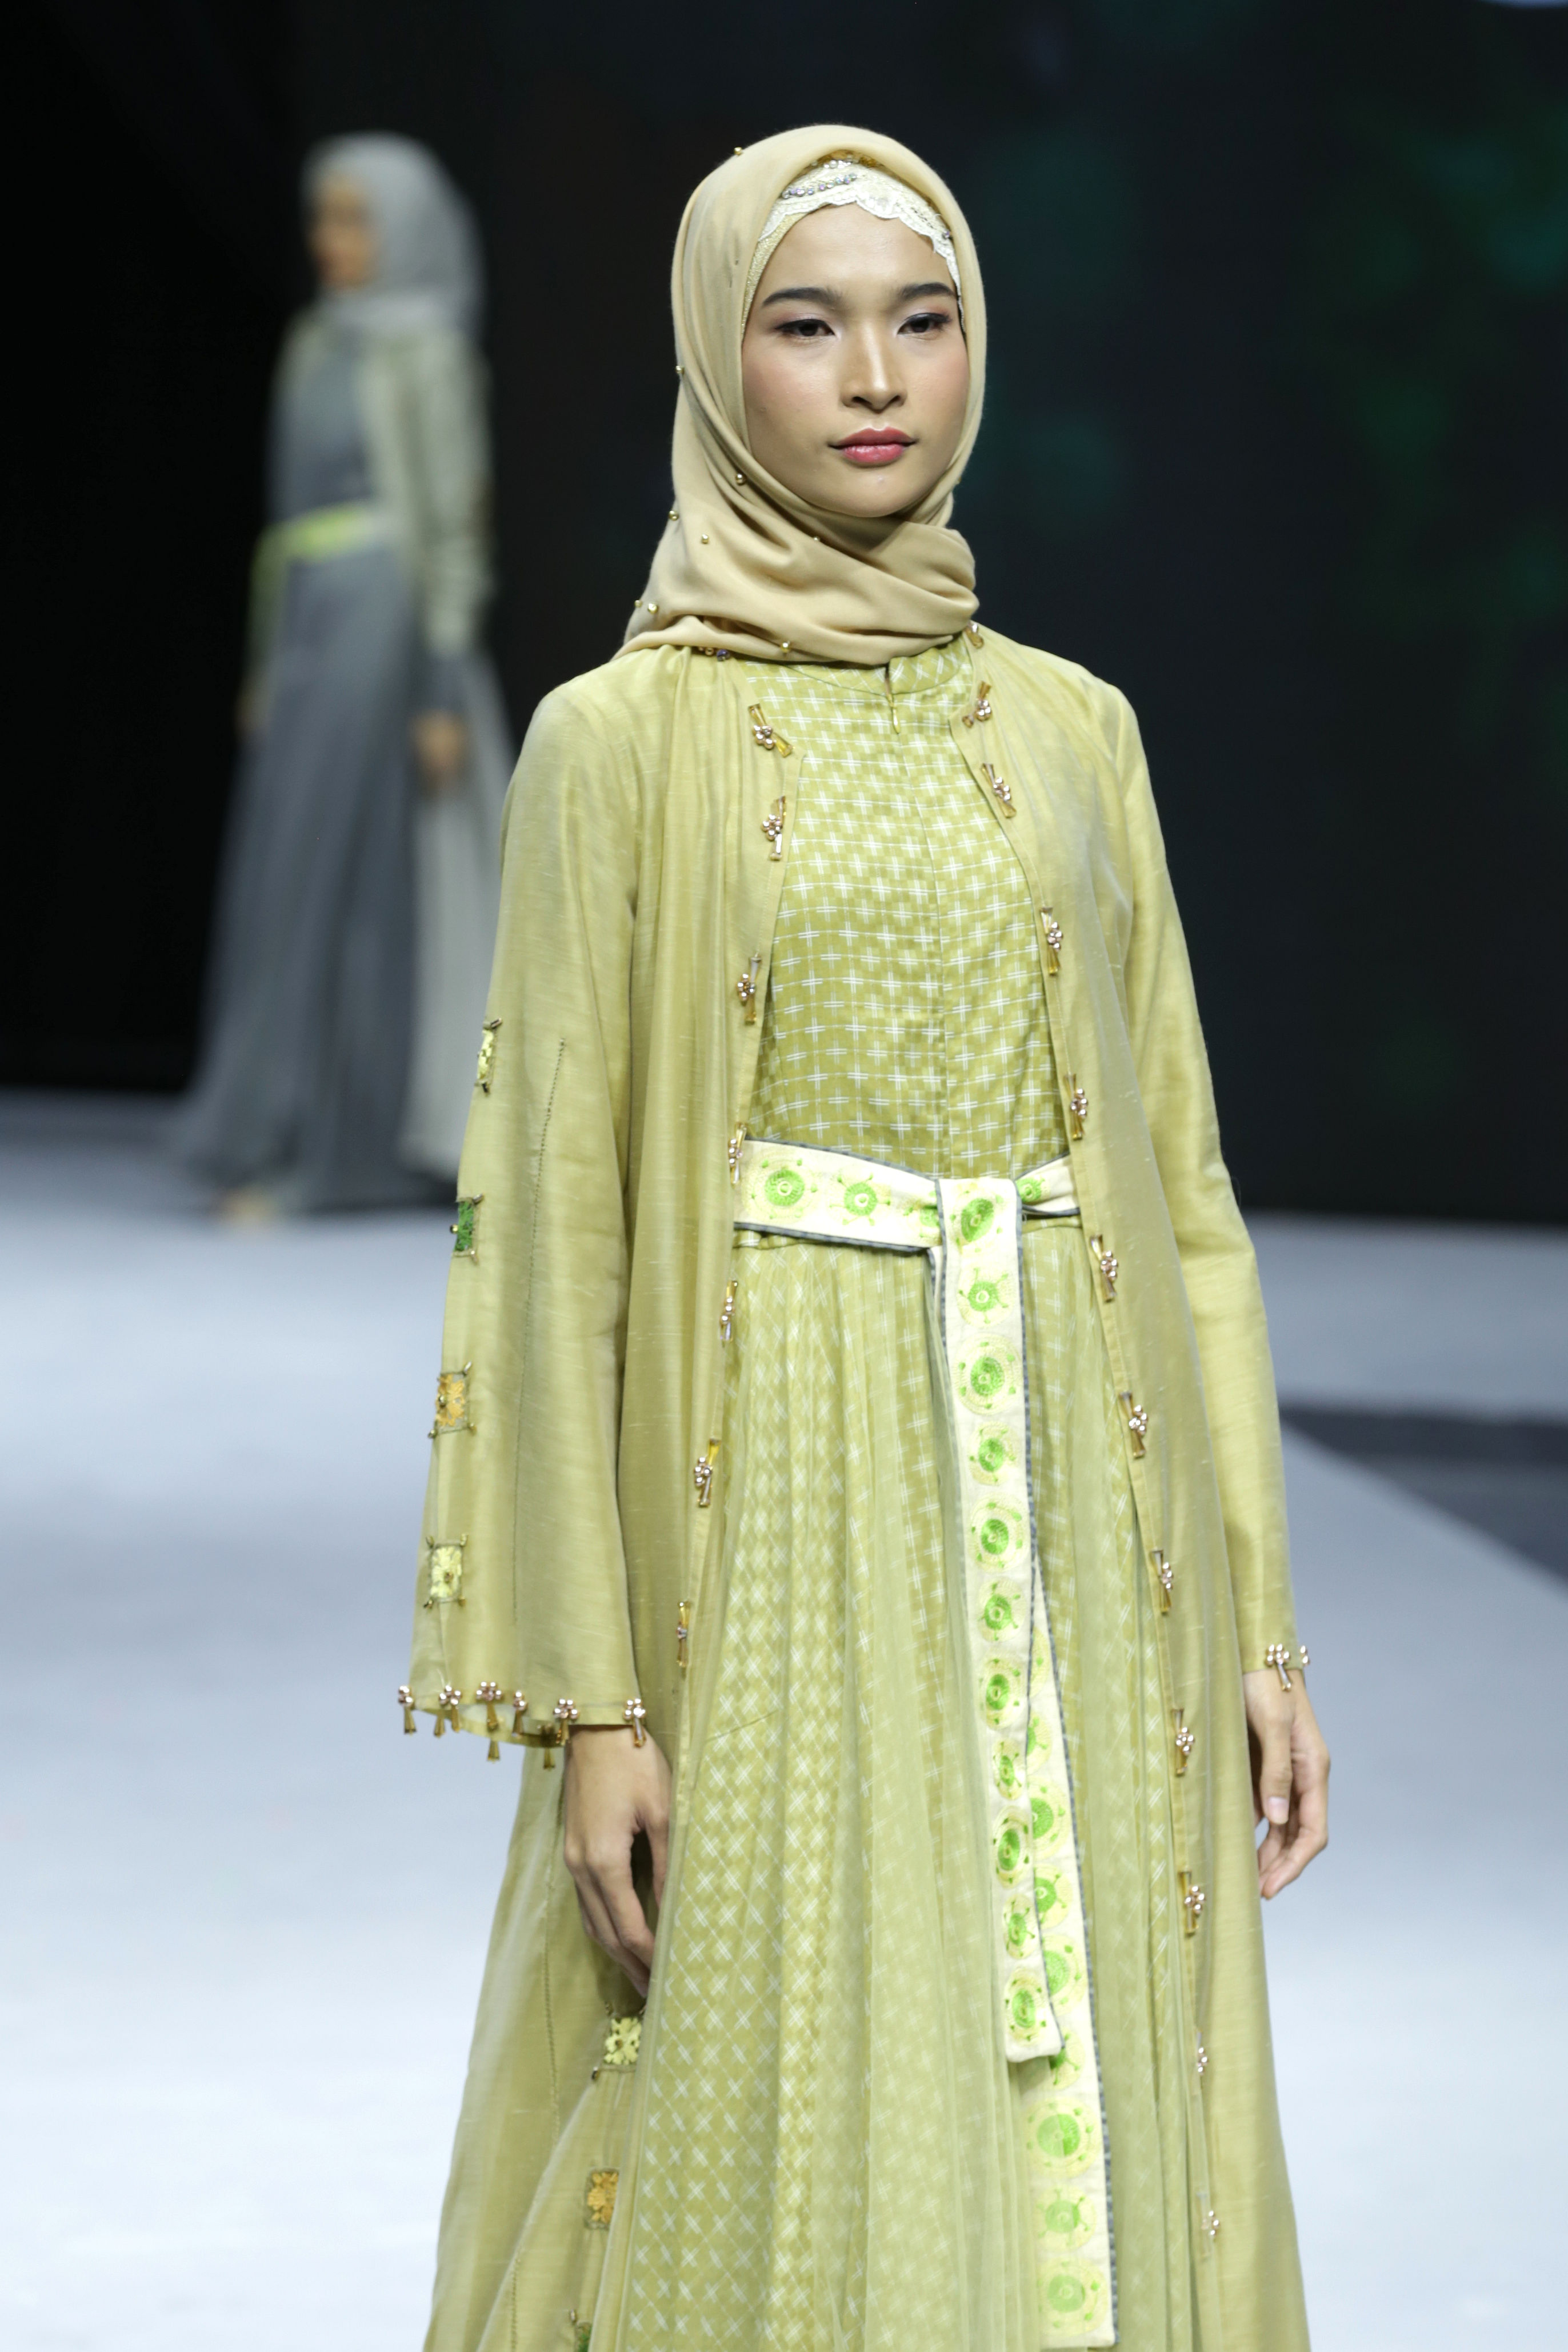 Corona Dalam Balutan Fashion Muslim Yang Stylish Dreamcoid